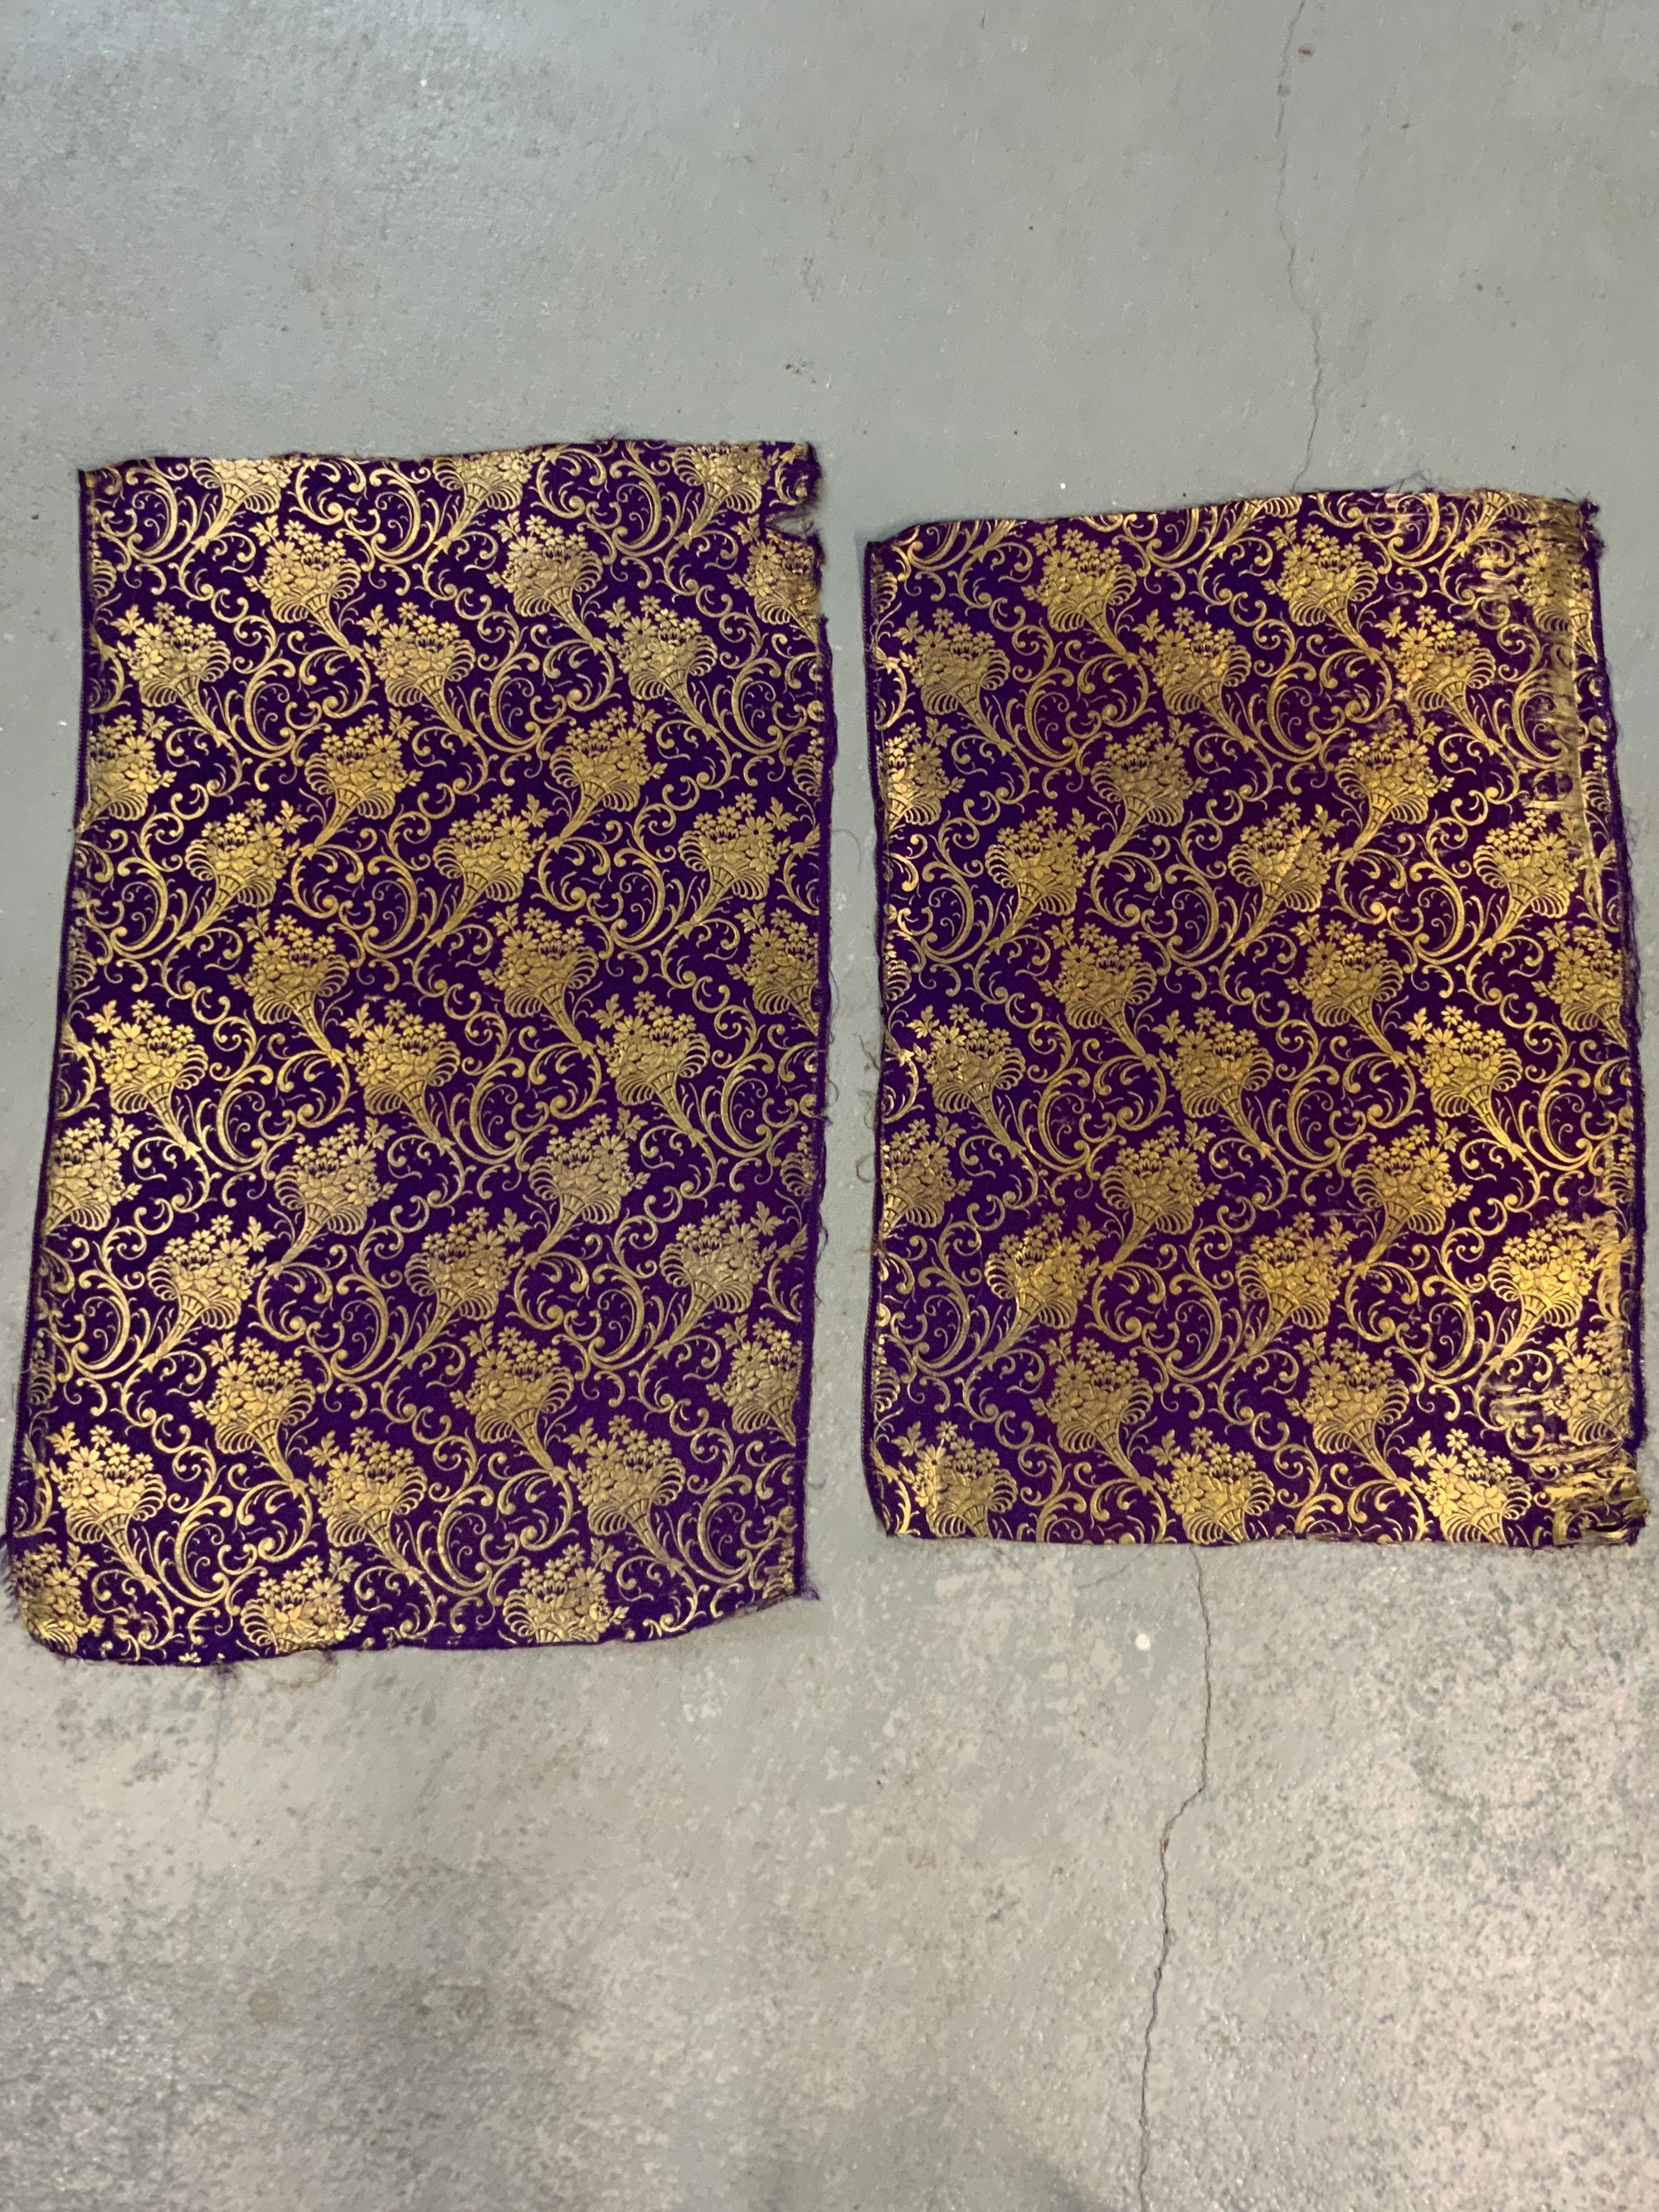 Gilt & silk brocade fragments (86 x 55cm) [2]